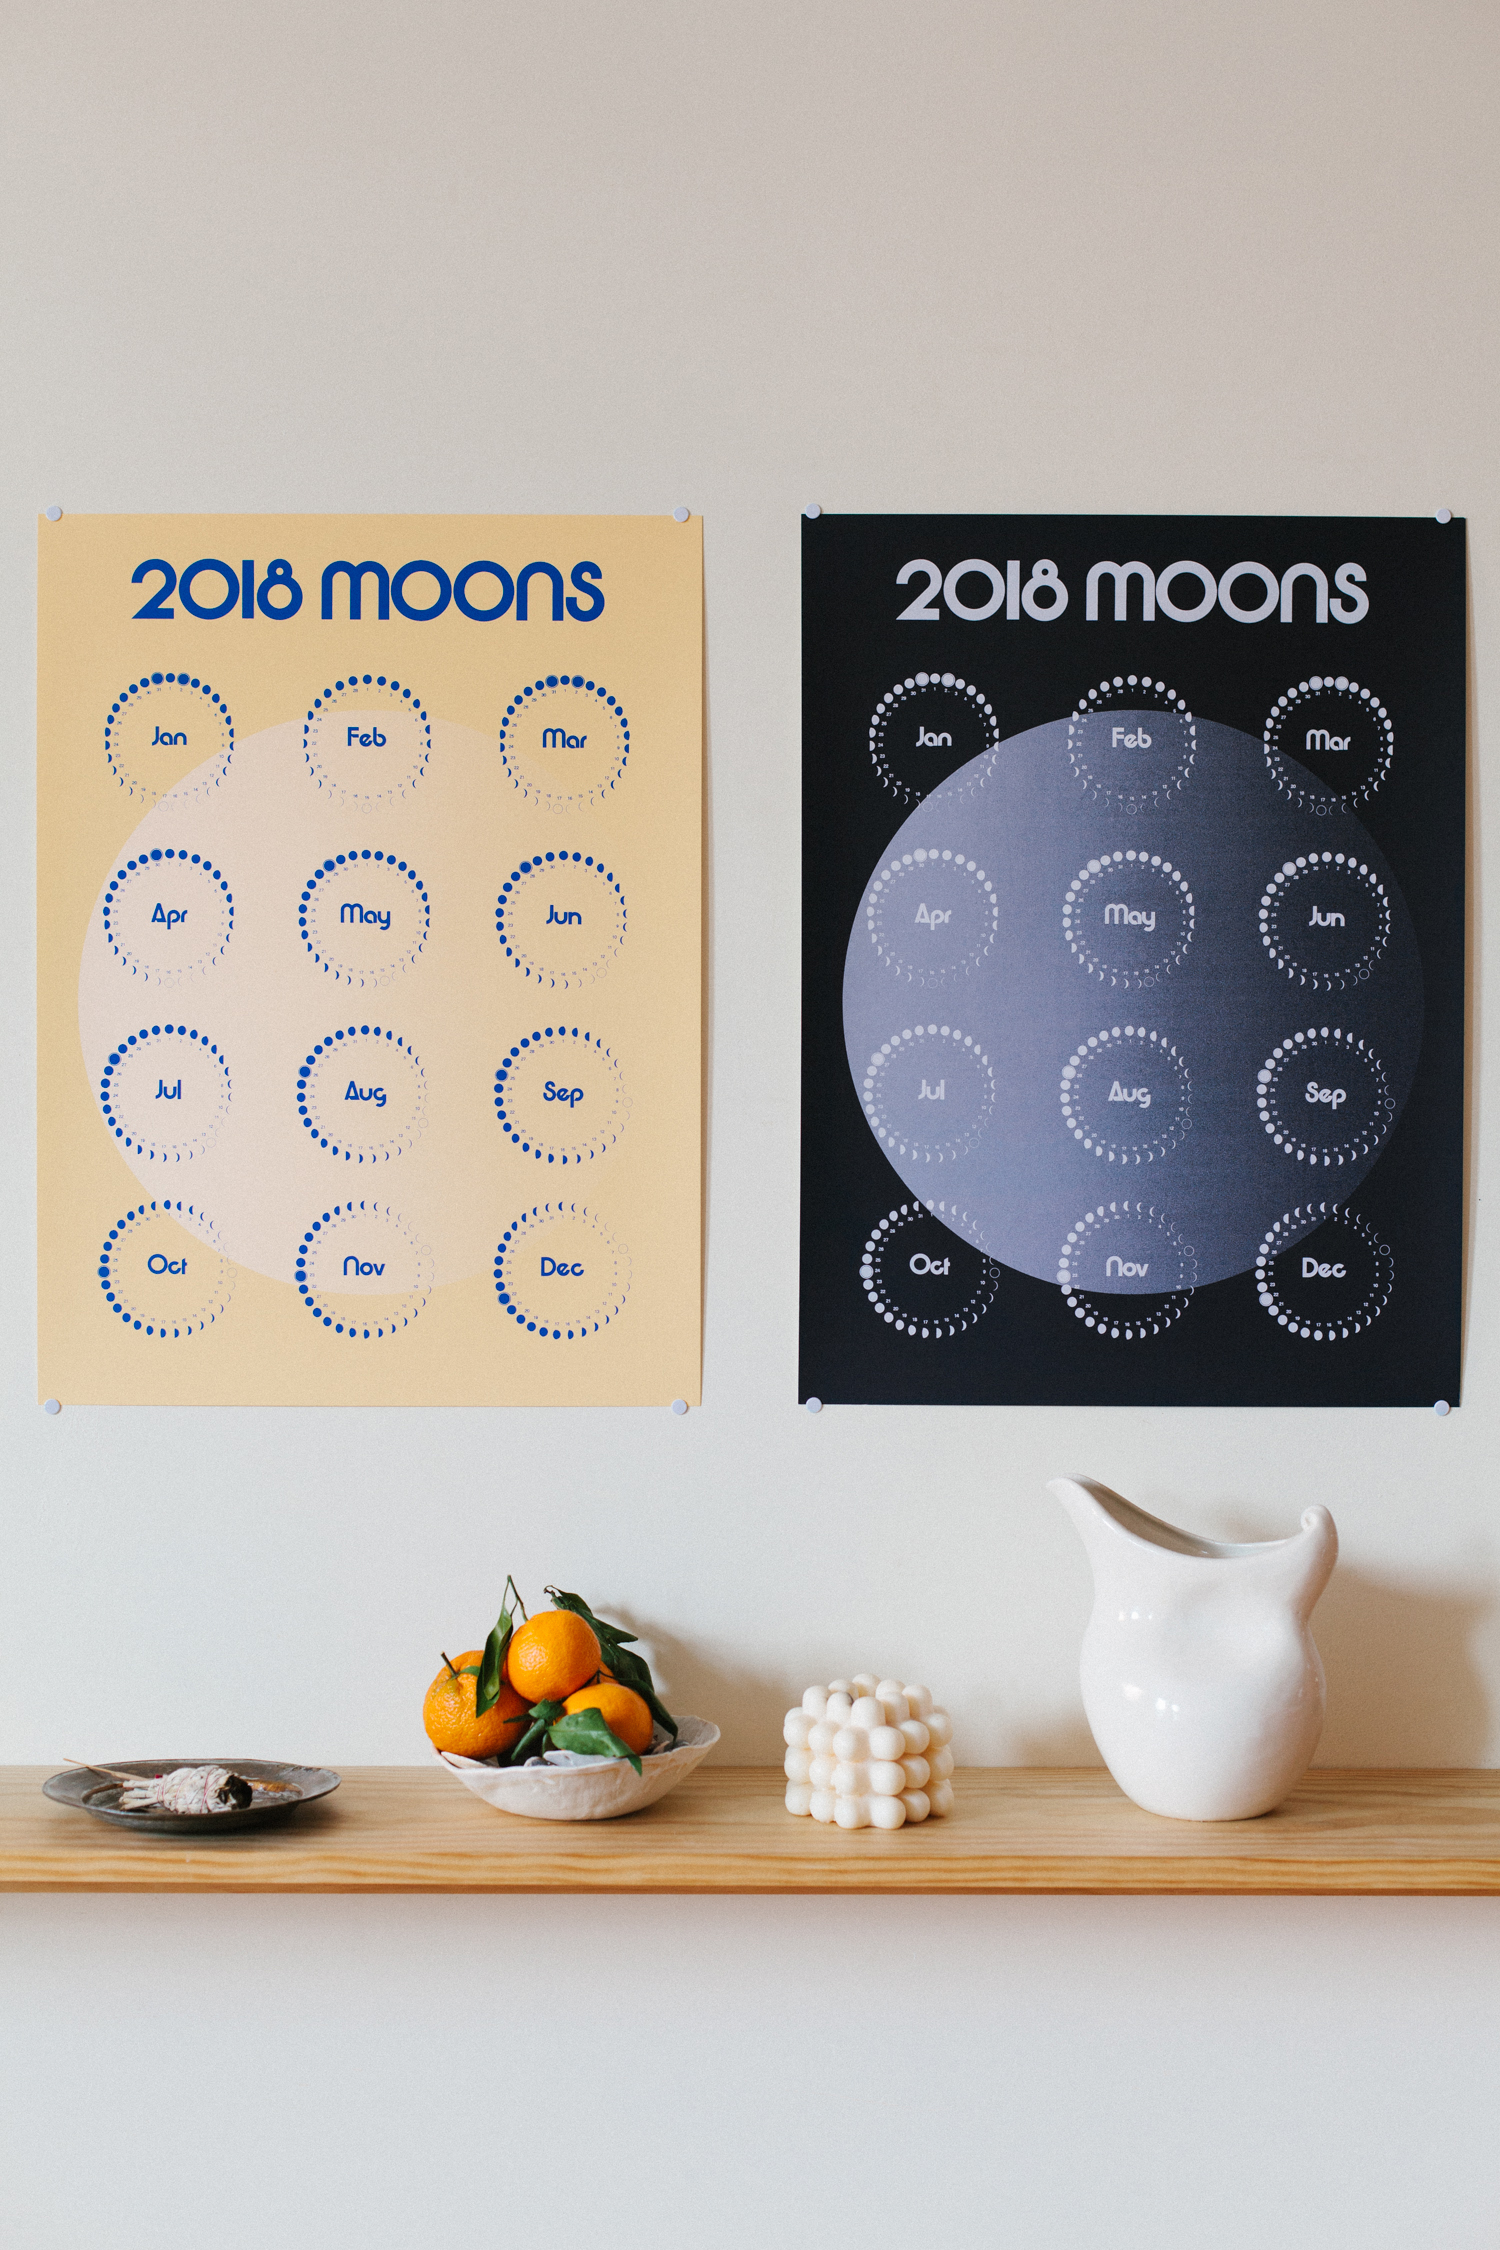 Moon Phase Calendar from m00ns.com - Golubka Kitchen